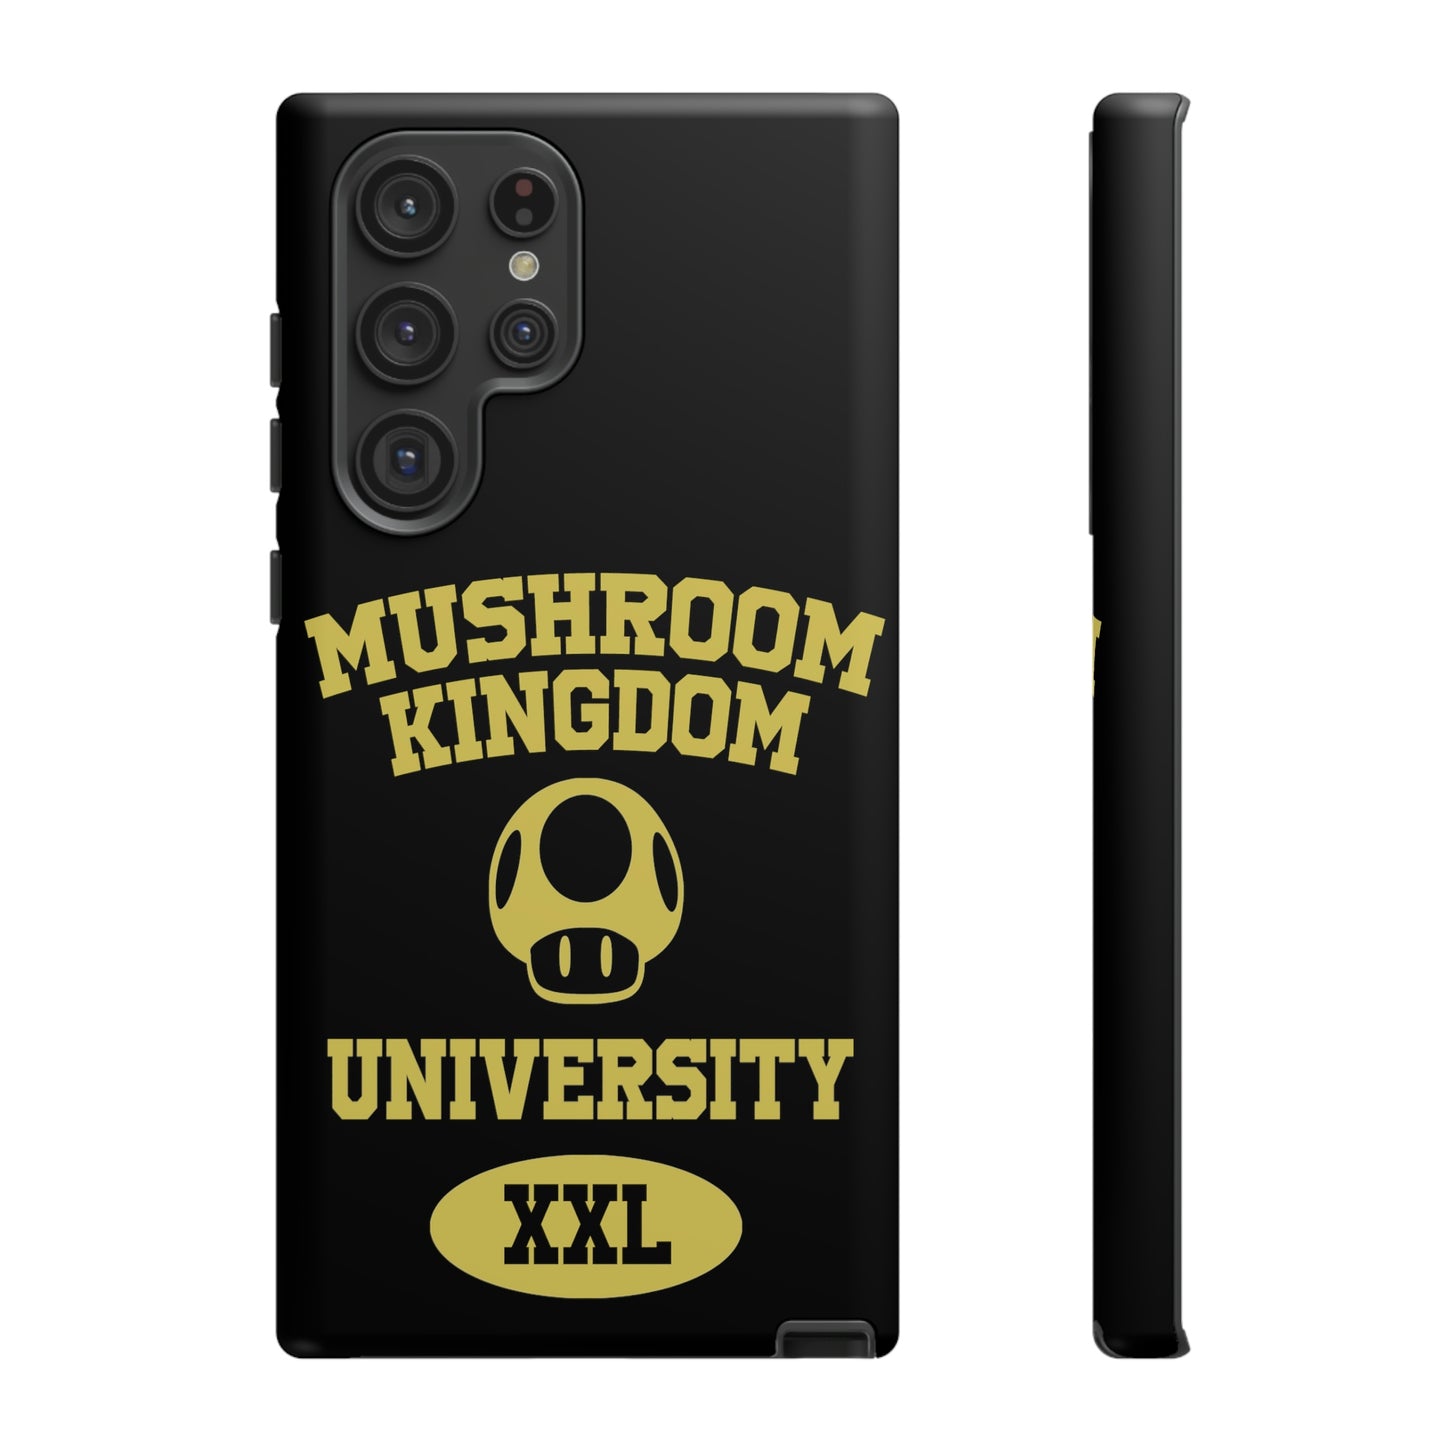 Super Mario Bros Tough Case - Mushroom Kingdom University